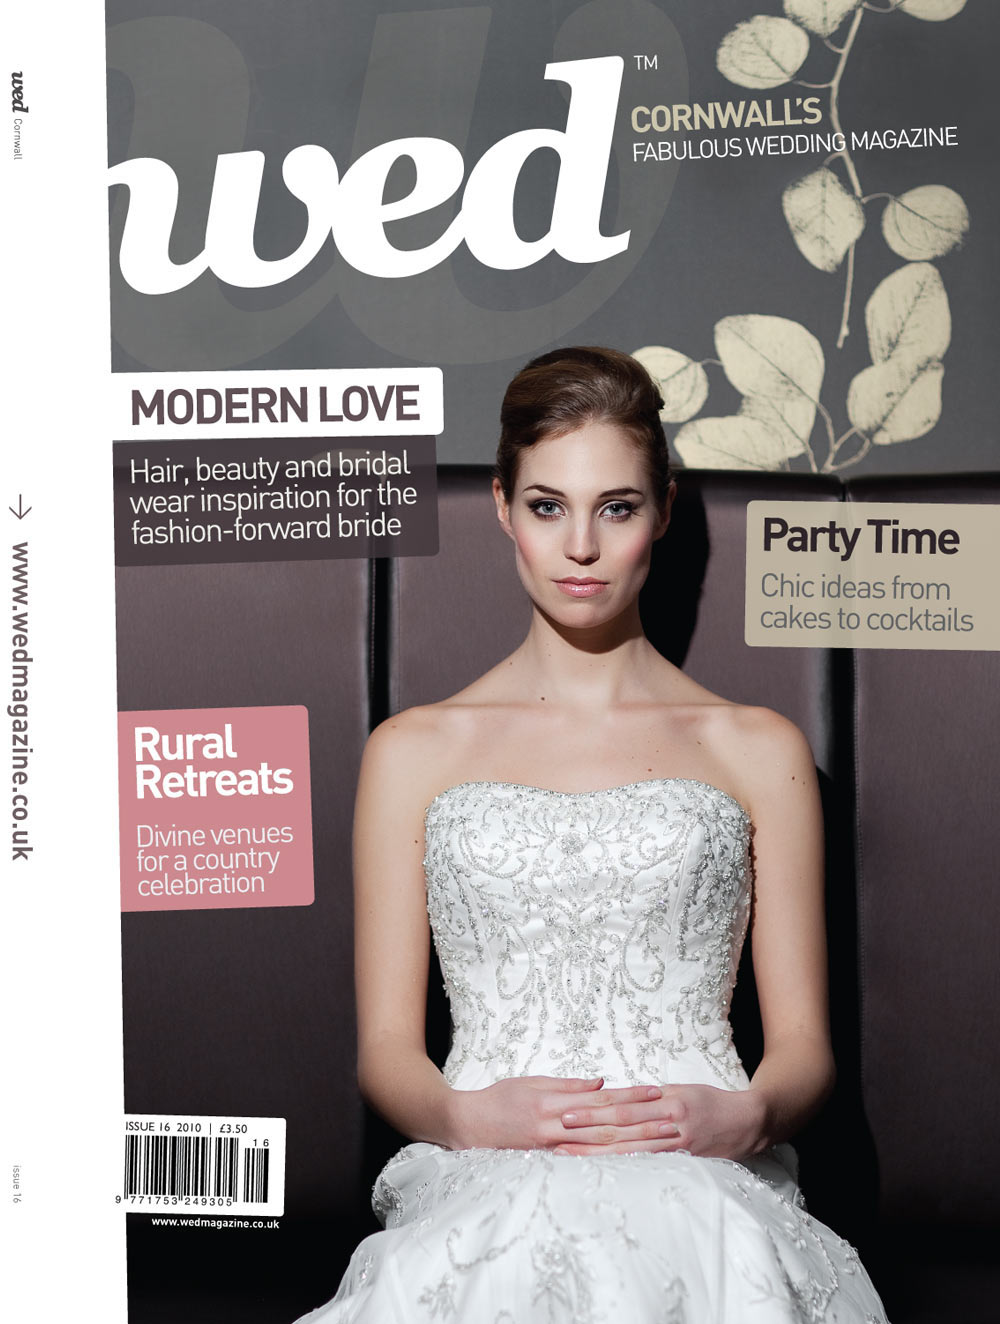 Cornwall Wed Magazine - Issue 16